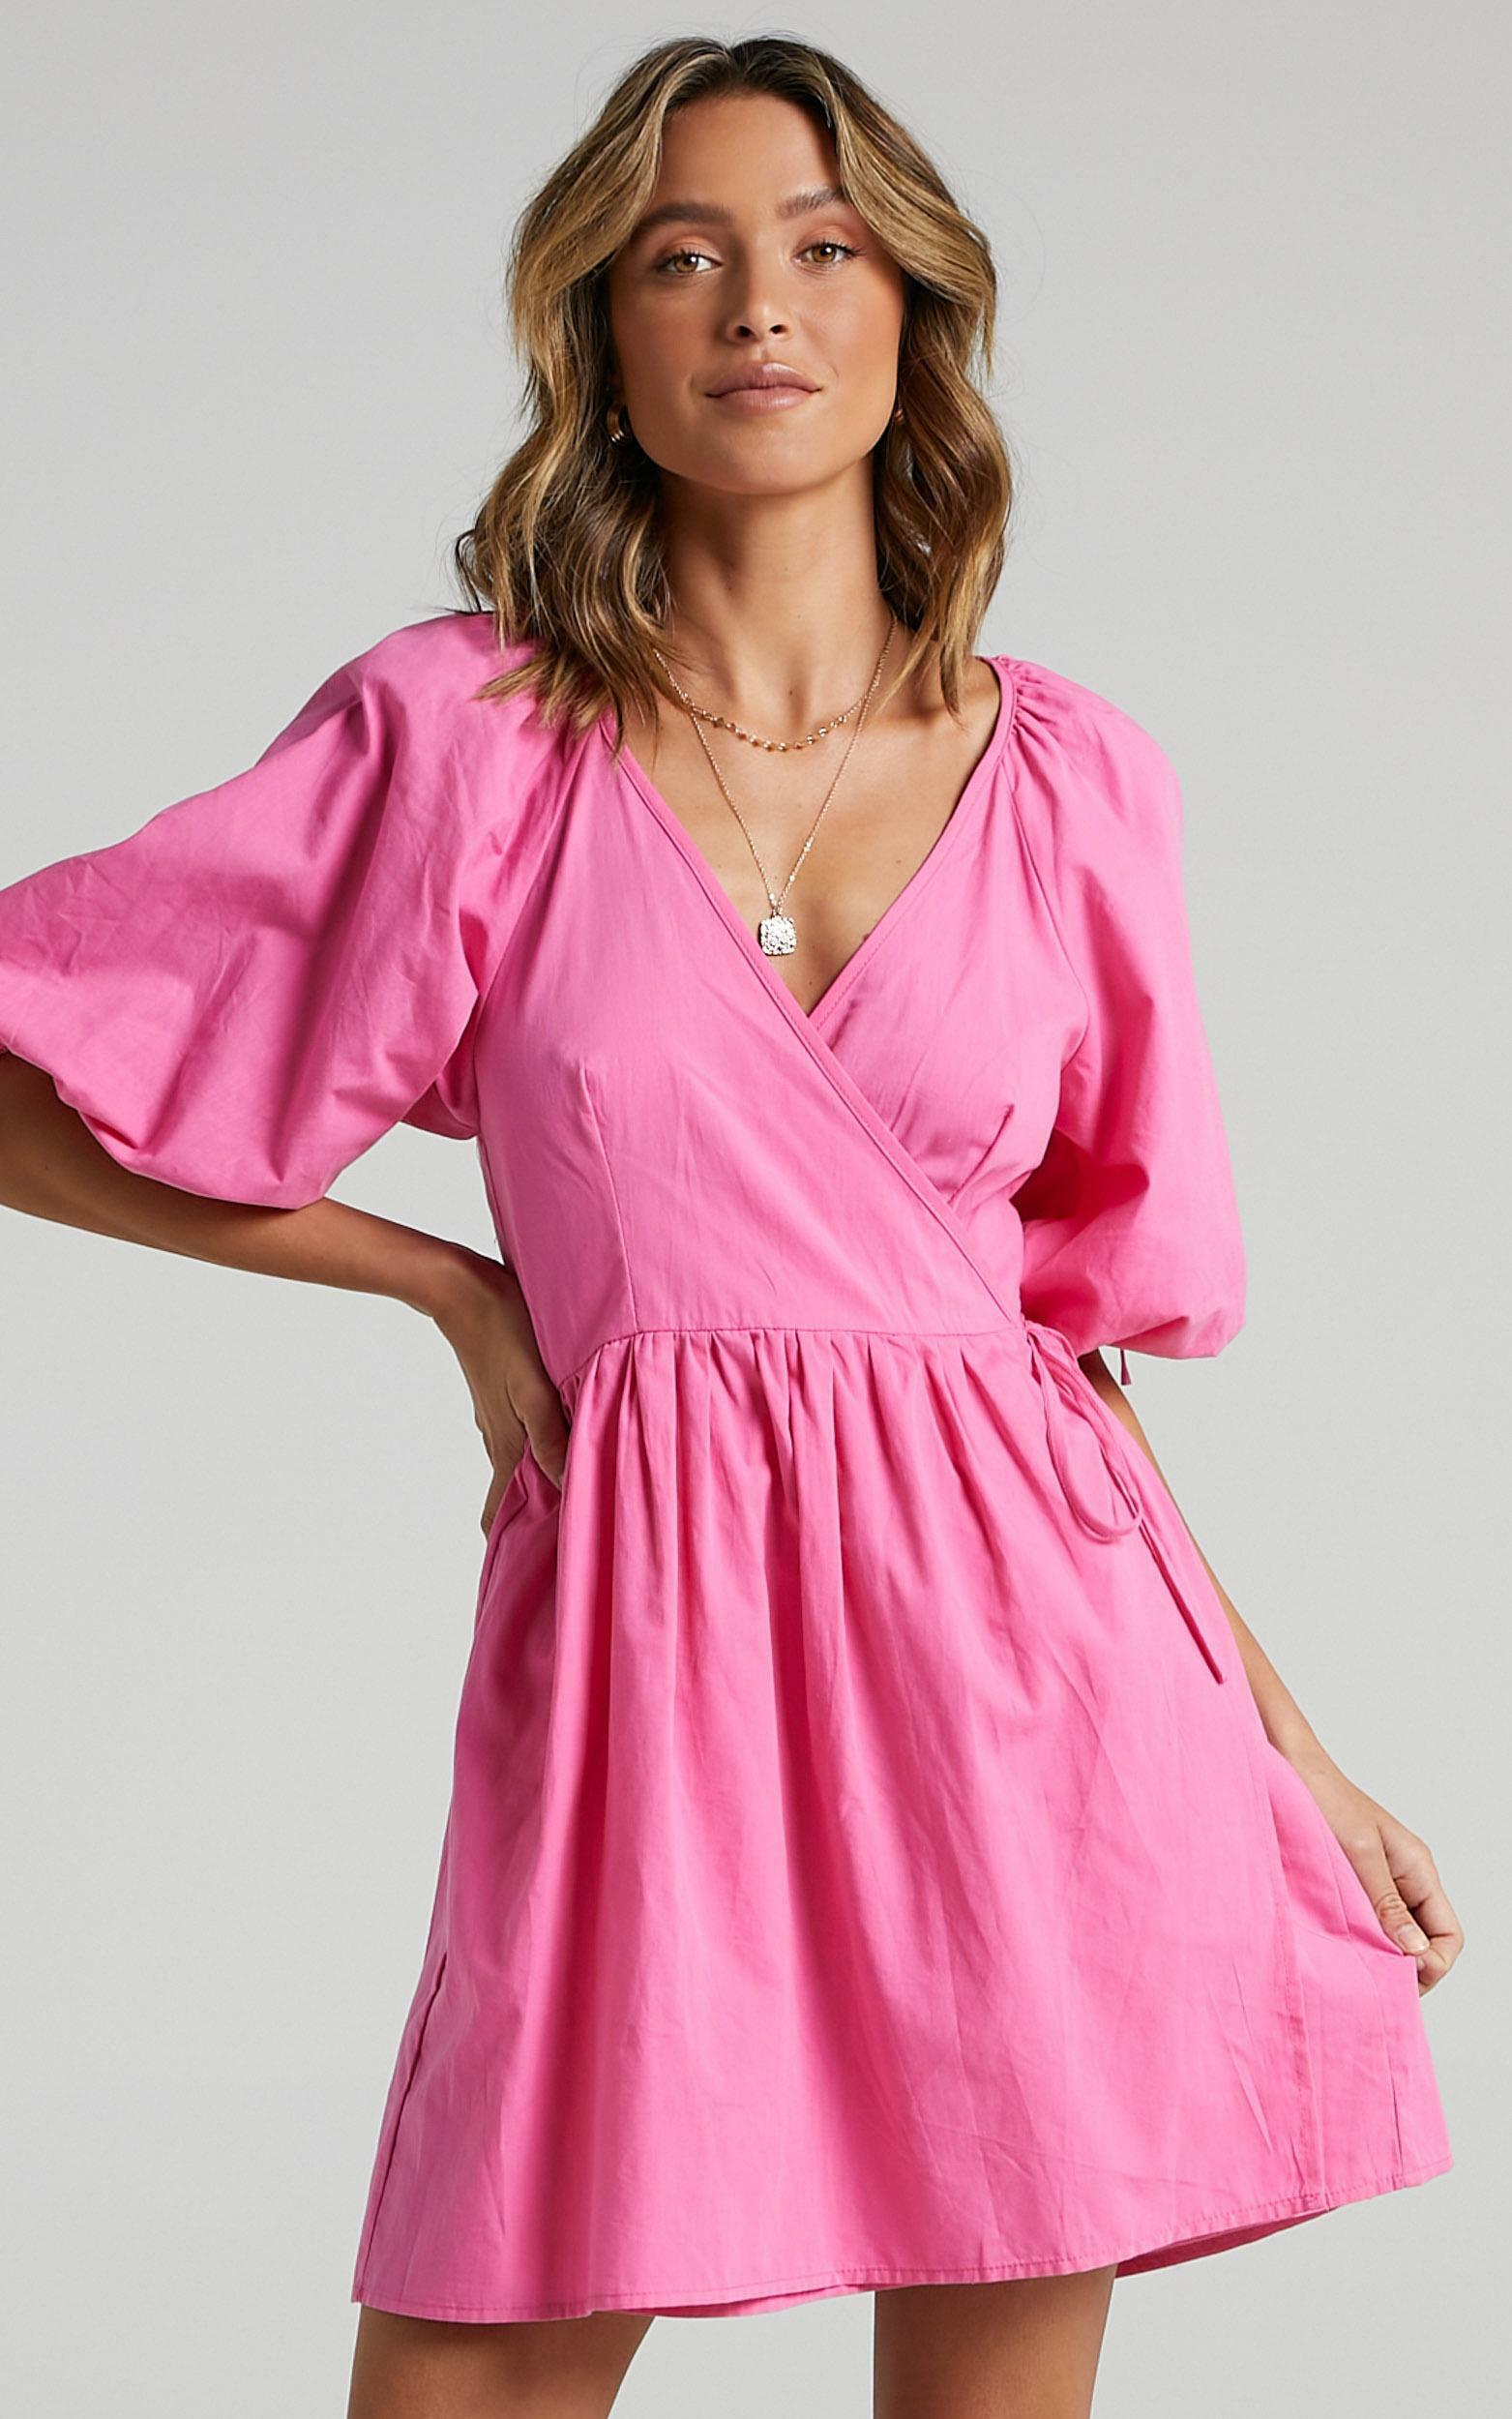 Veronnie Dress in Pink - 06, PNK2, hi-res image number null